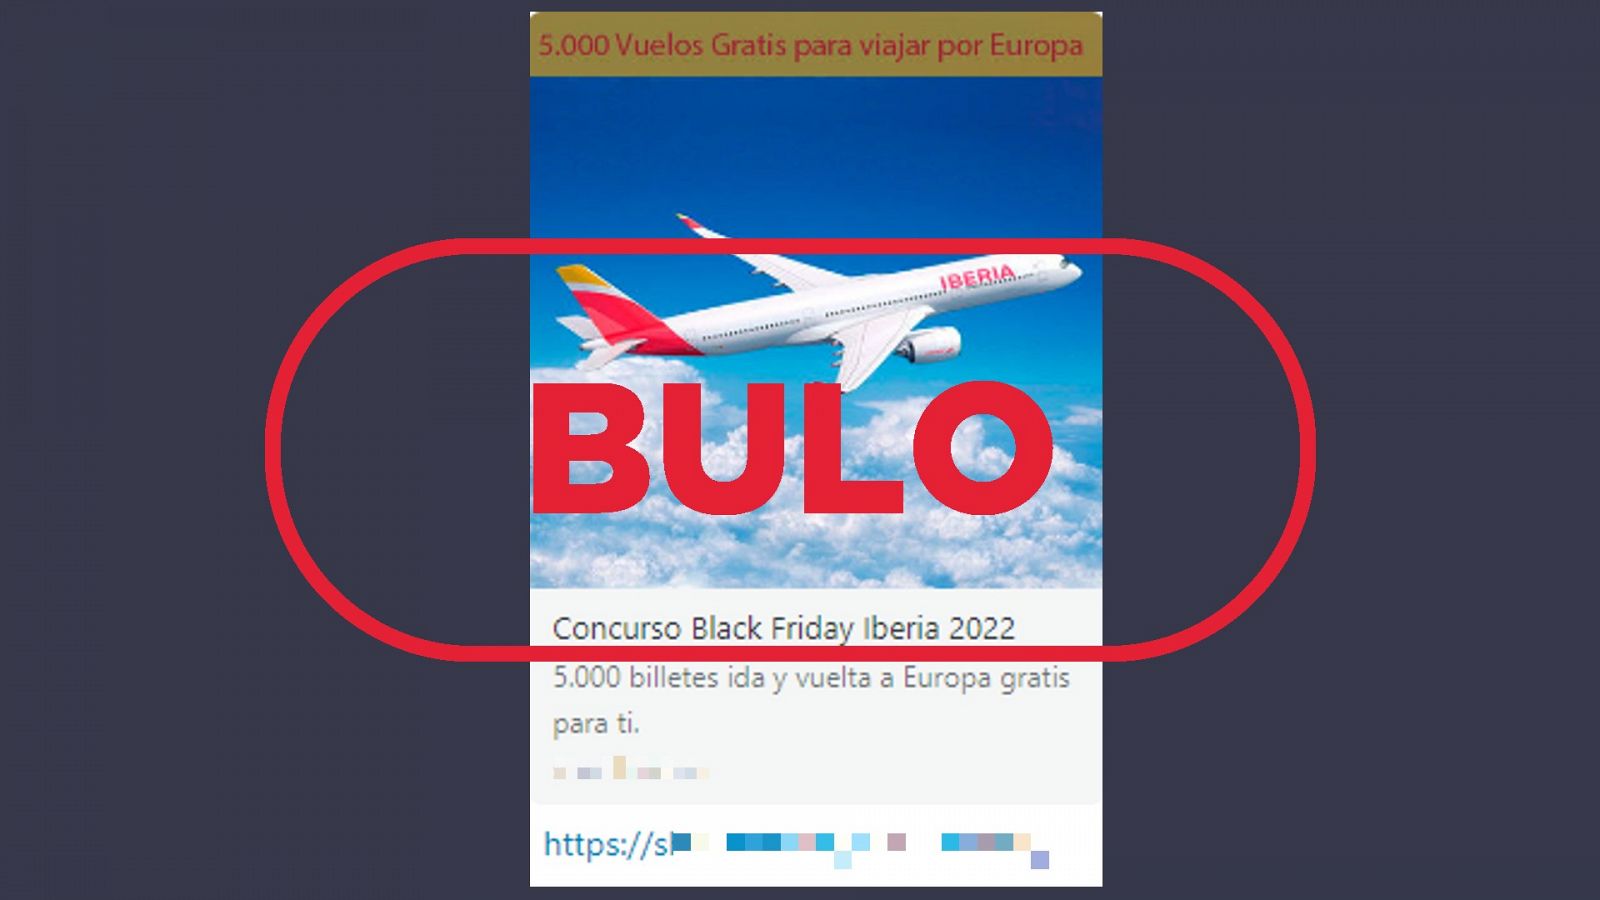 Captura del mensaje sobre el falso concurso de Iberia que está circulando a través de WhatsApp